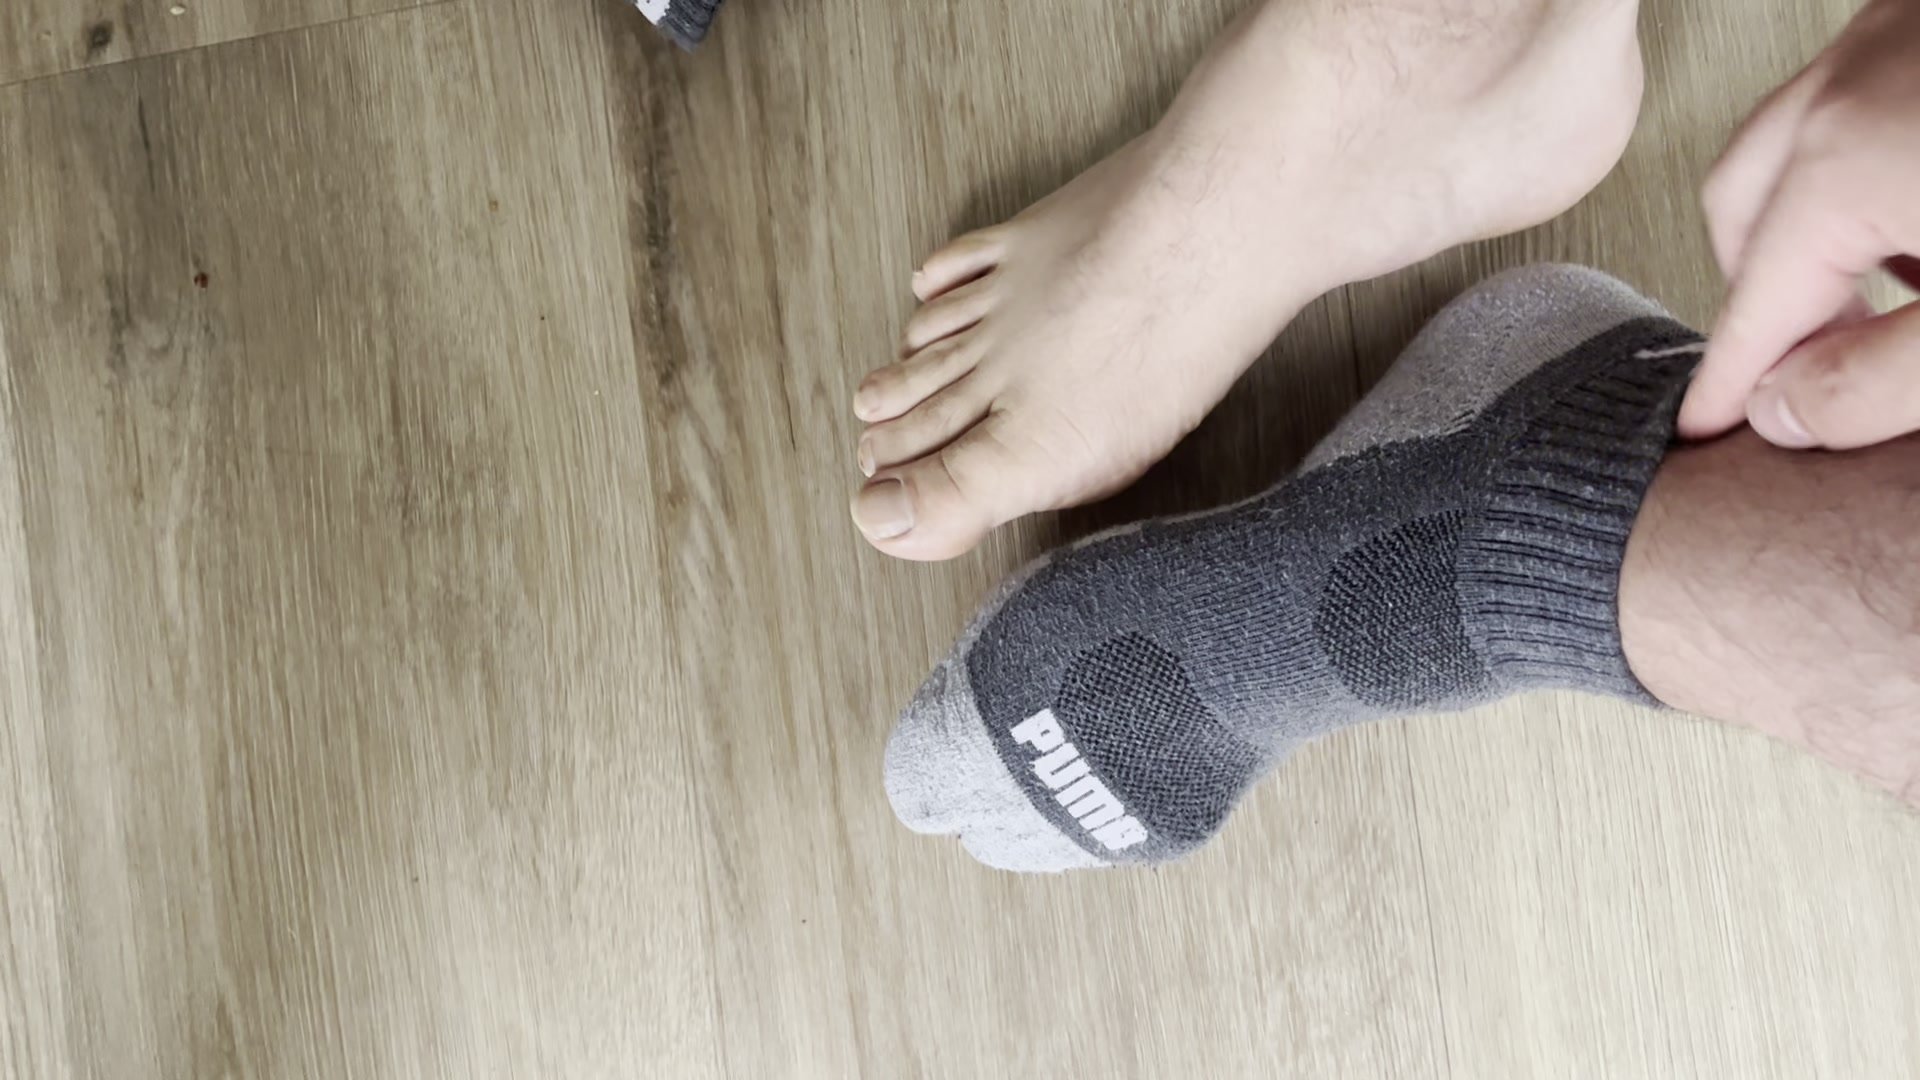 Socks and Feet - video 6